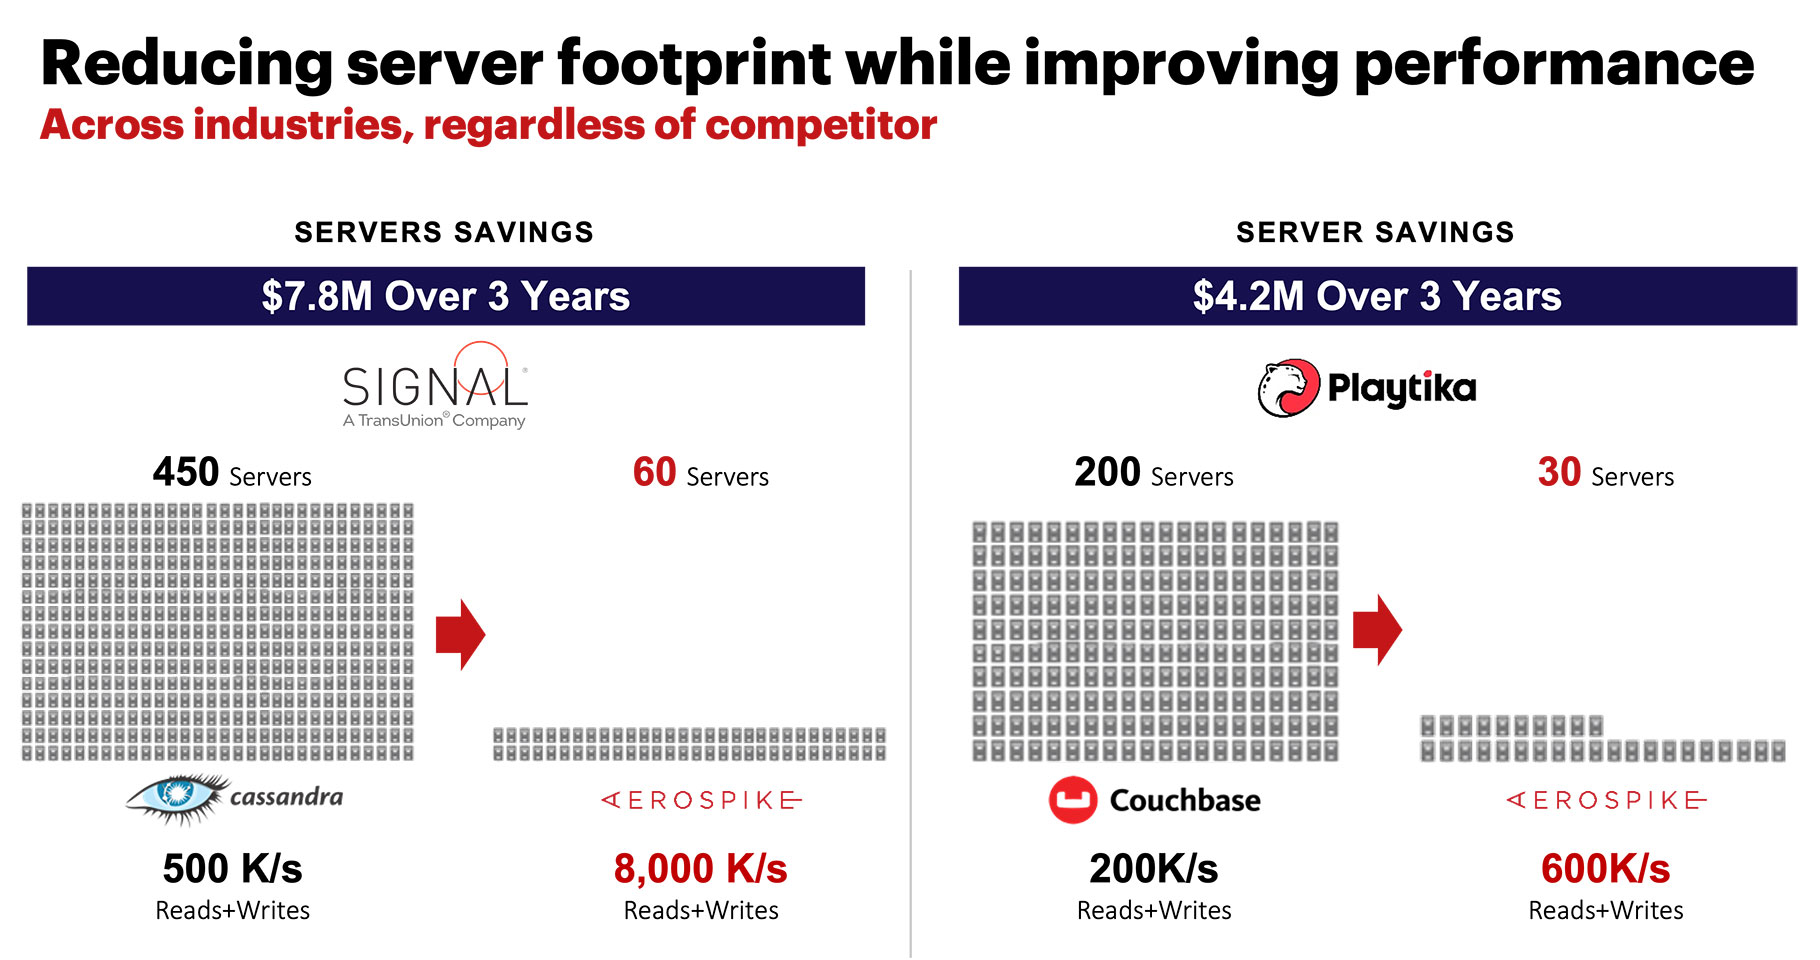 Reducing server footprint while improving performance